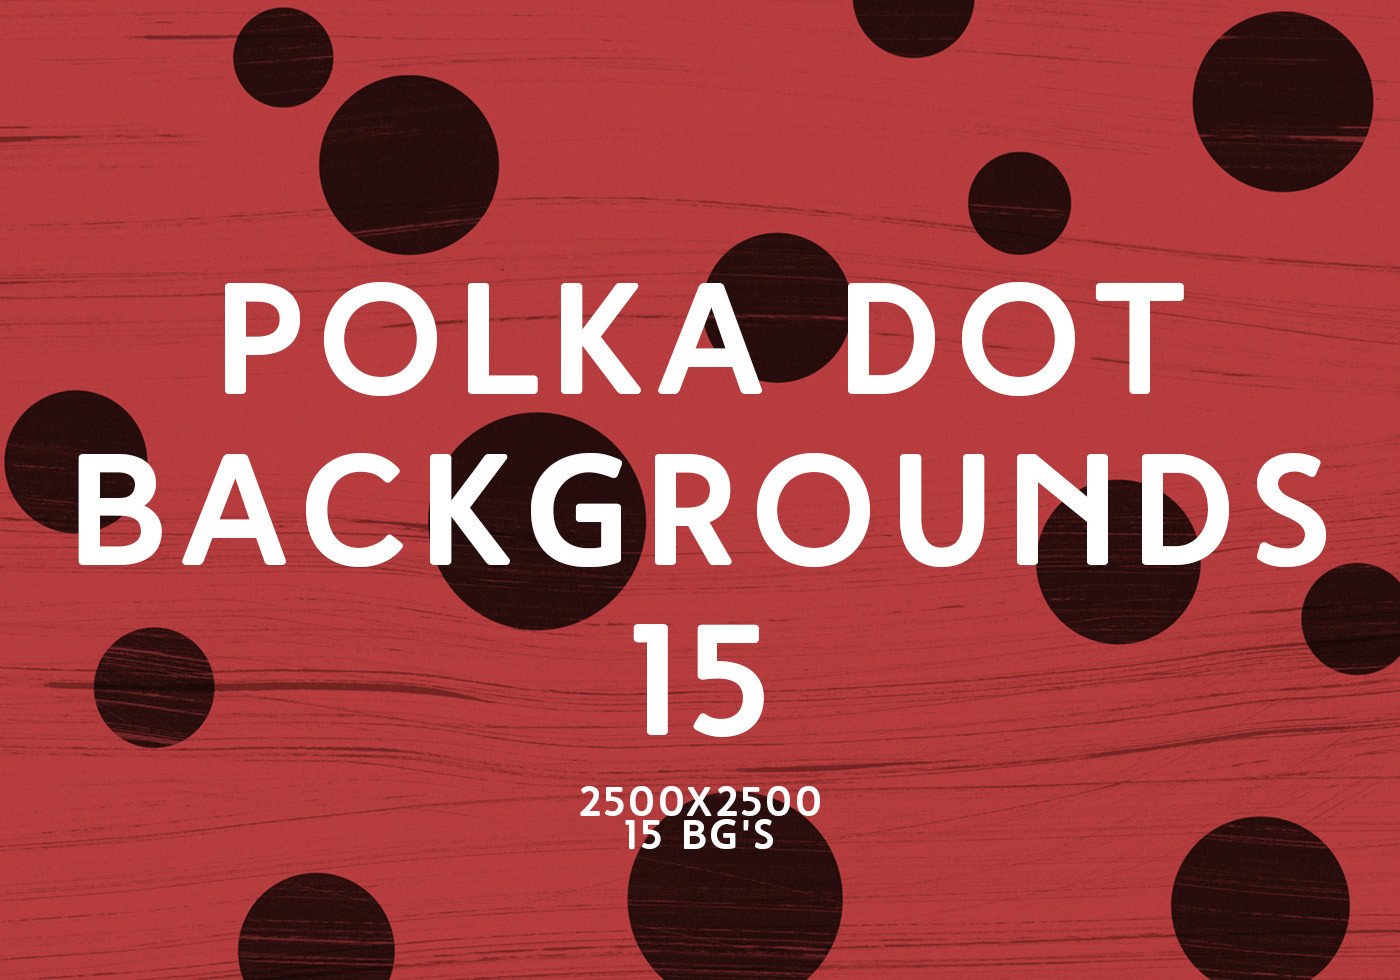 Polka Dot Backgrounds 15 Free shop Brushes at